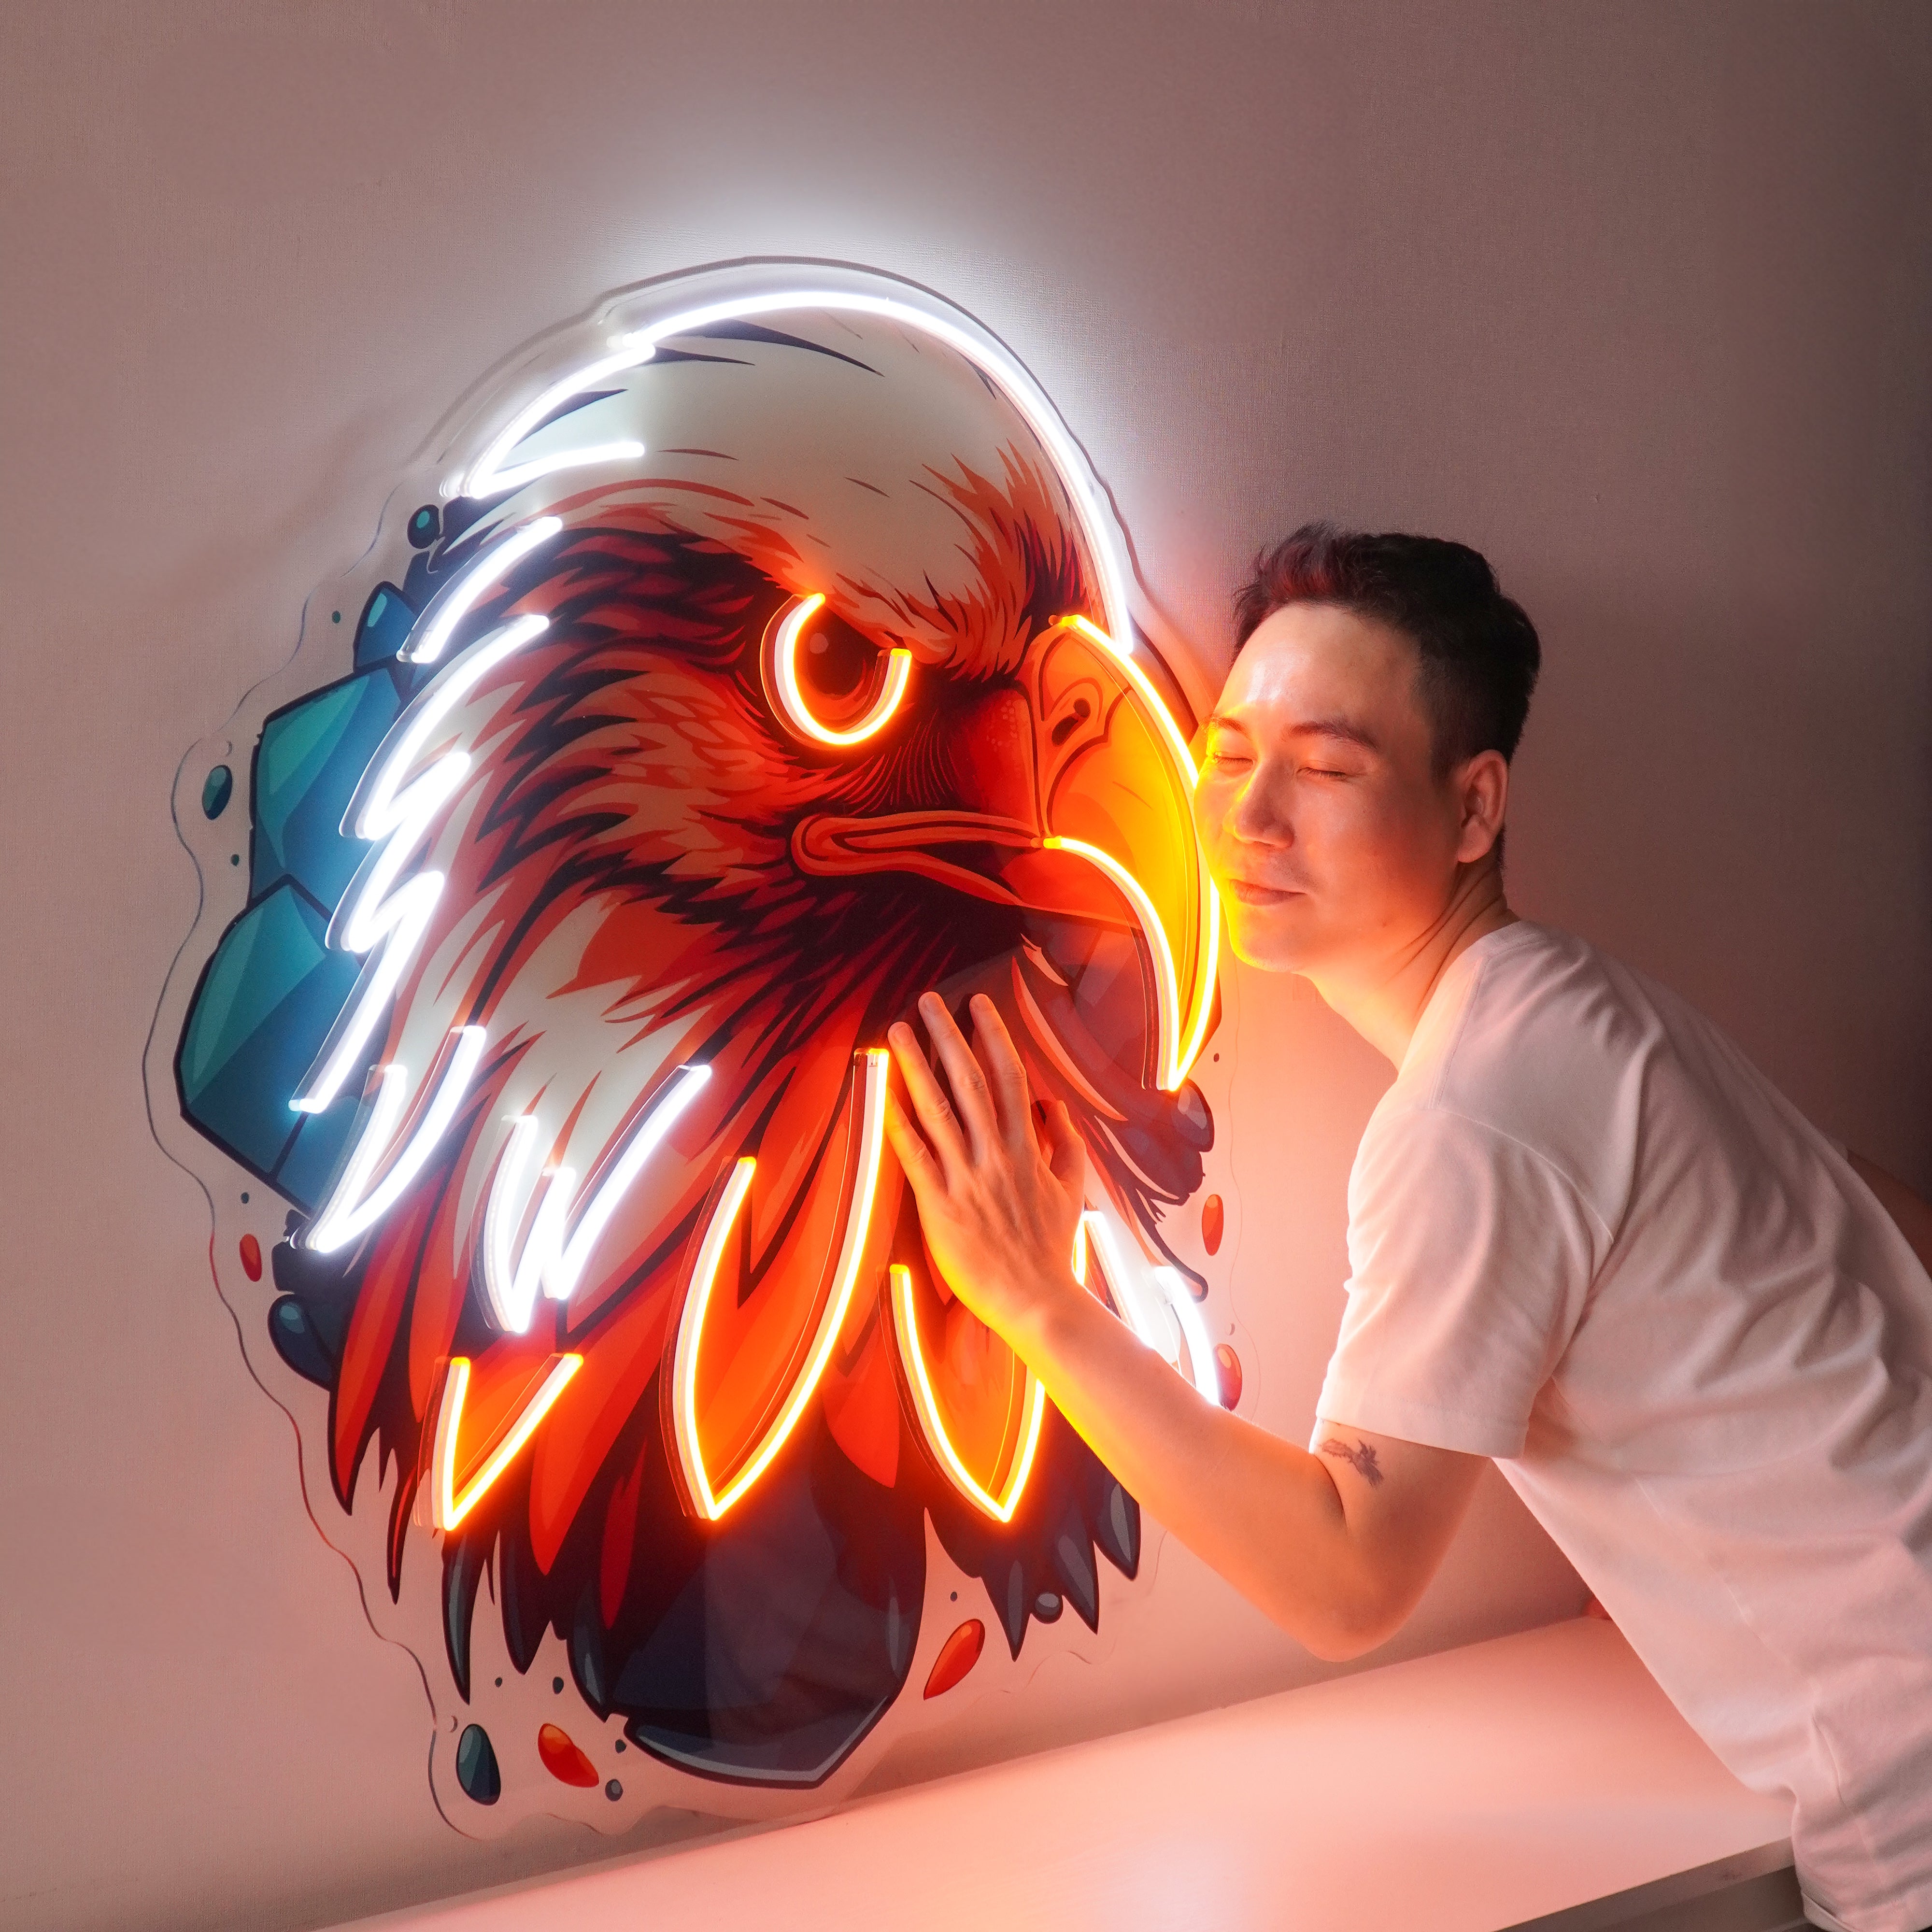 Eagle Head LED Neon Sign Light Pop Art